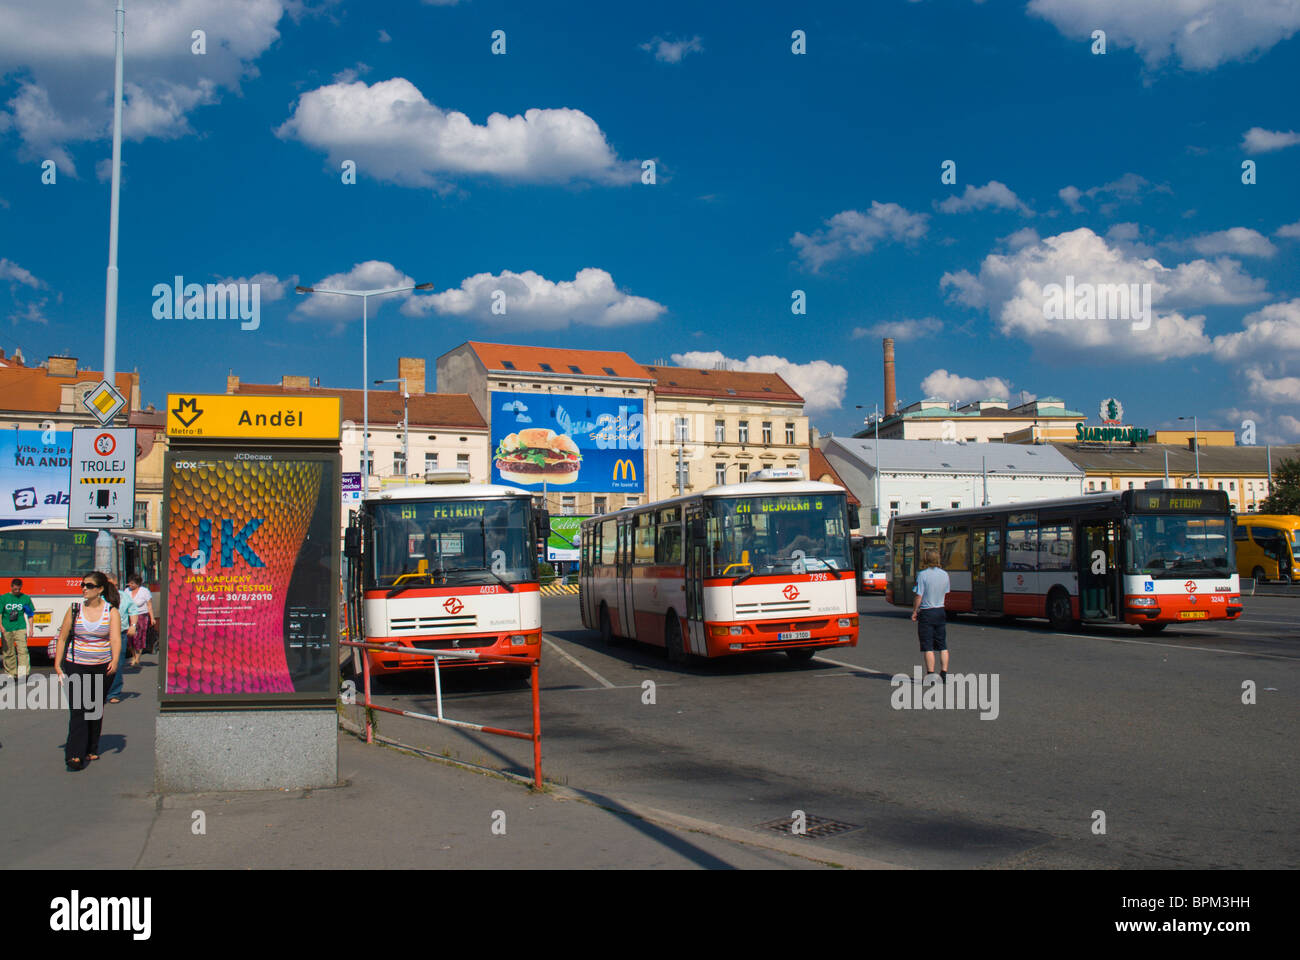 Andel autobusove nadrazi the Andel bus station Smichov district Prague Czech Republic Stock Photo